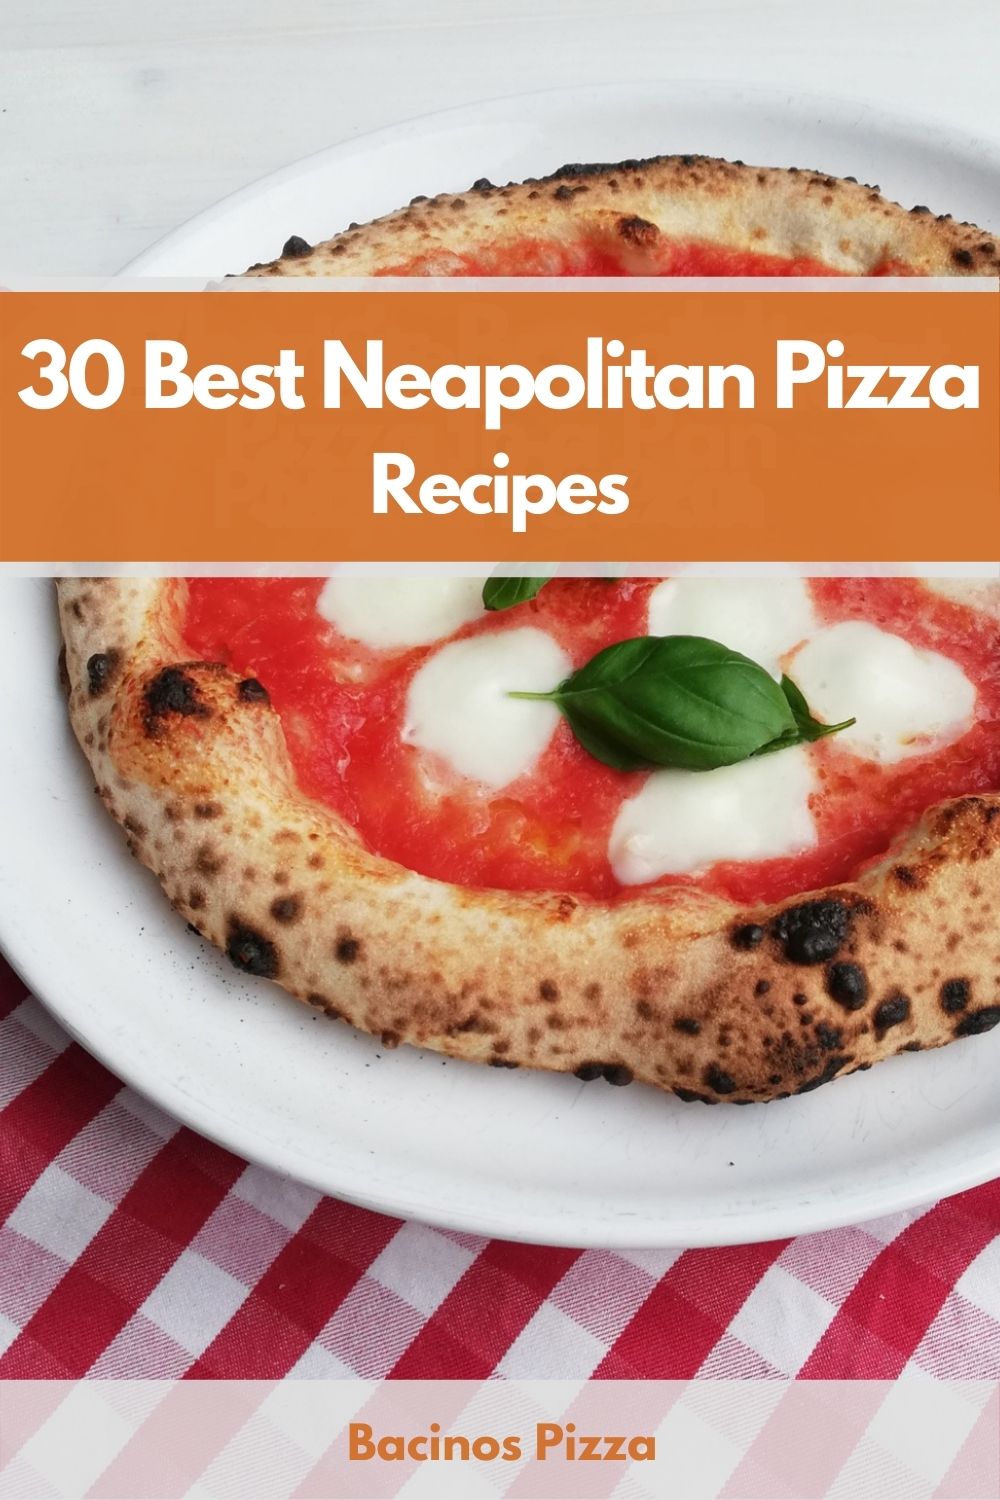 30 Best Neapolitan Pizza Recipes pin